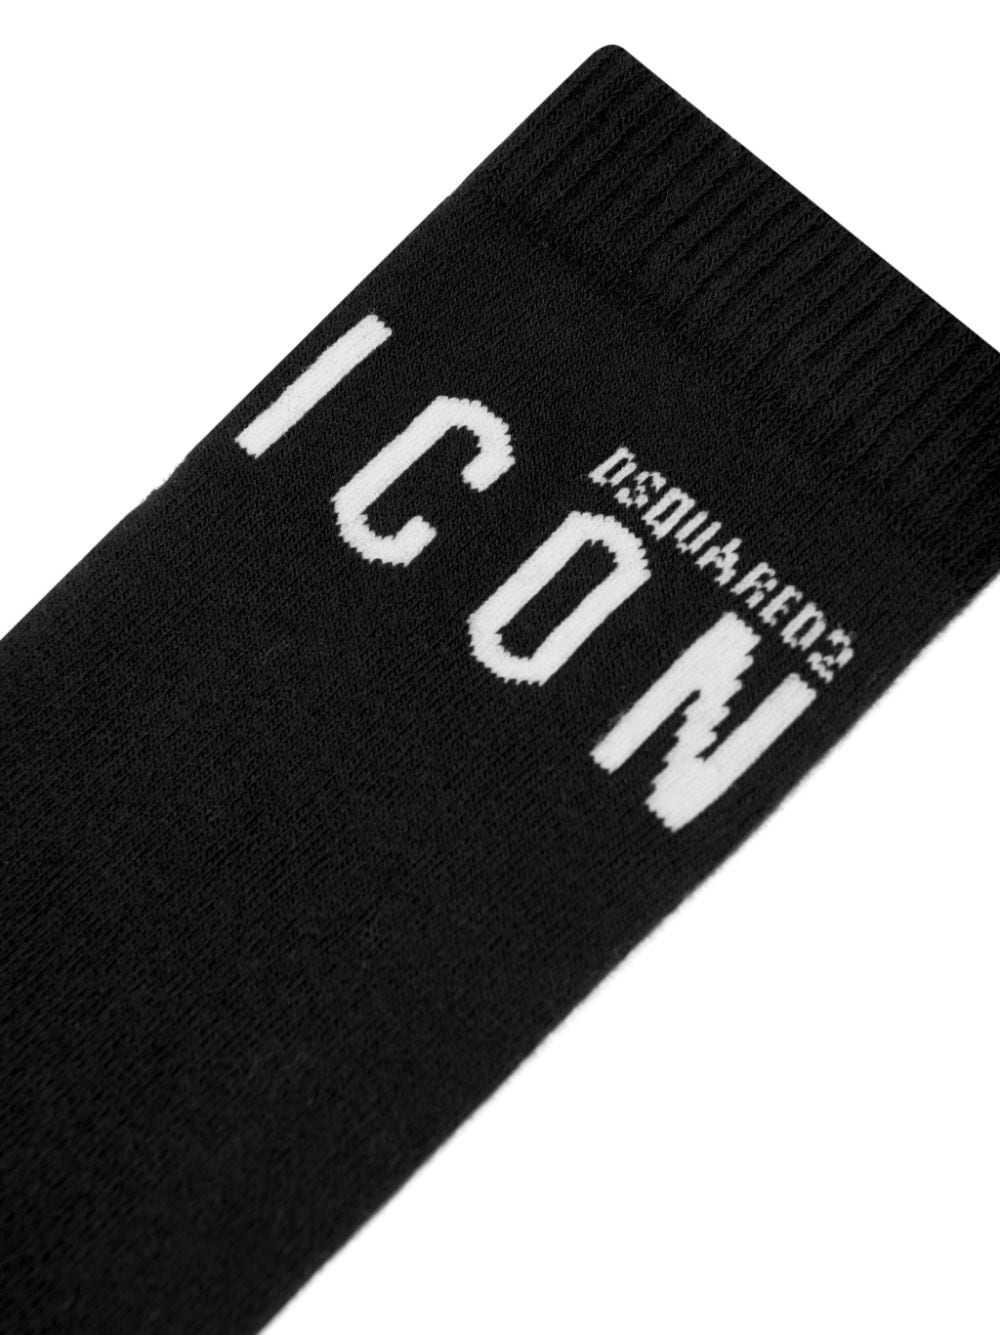 Black socks for children with ICON logo